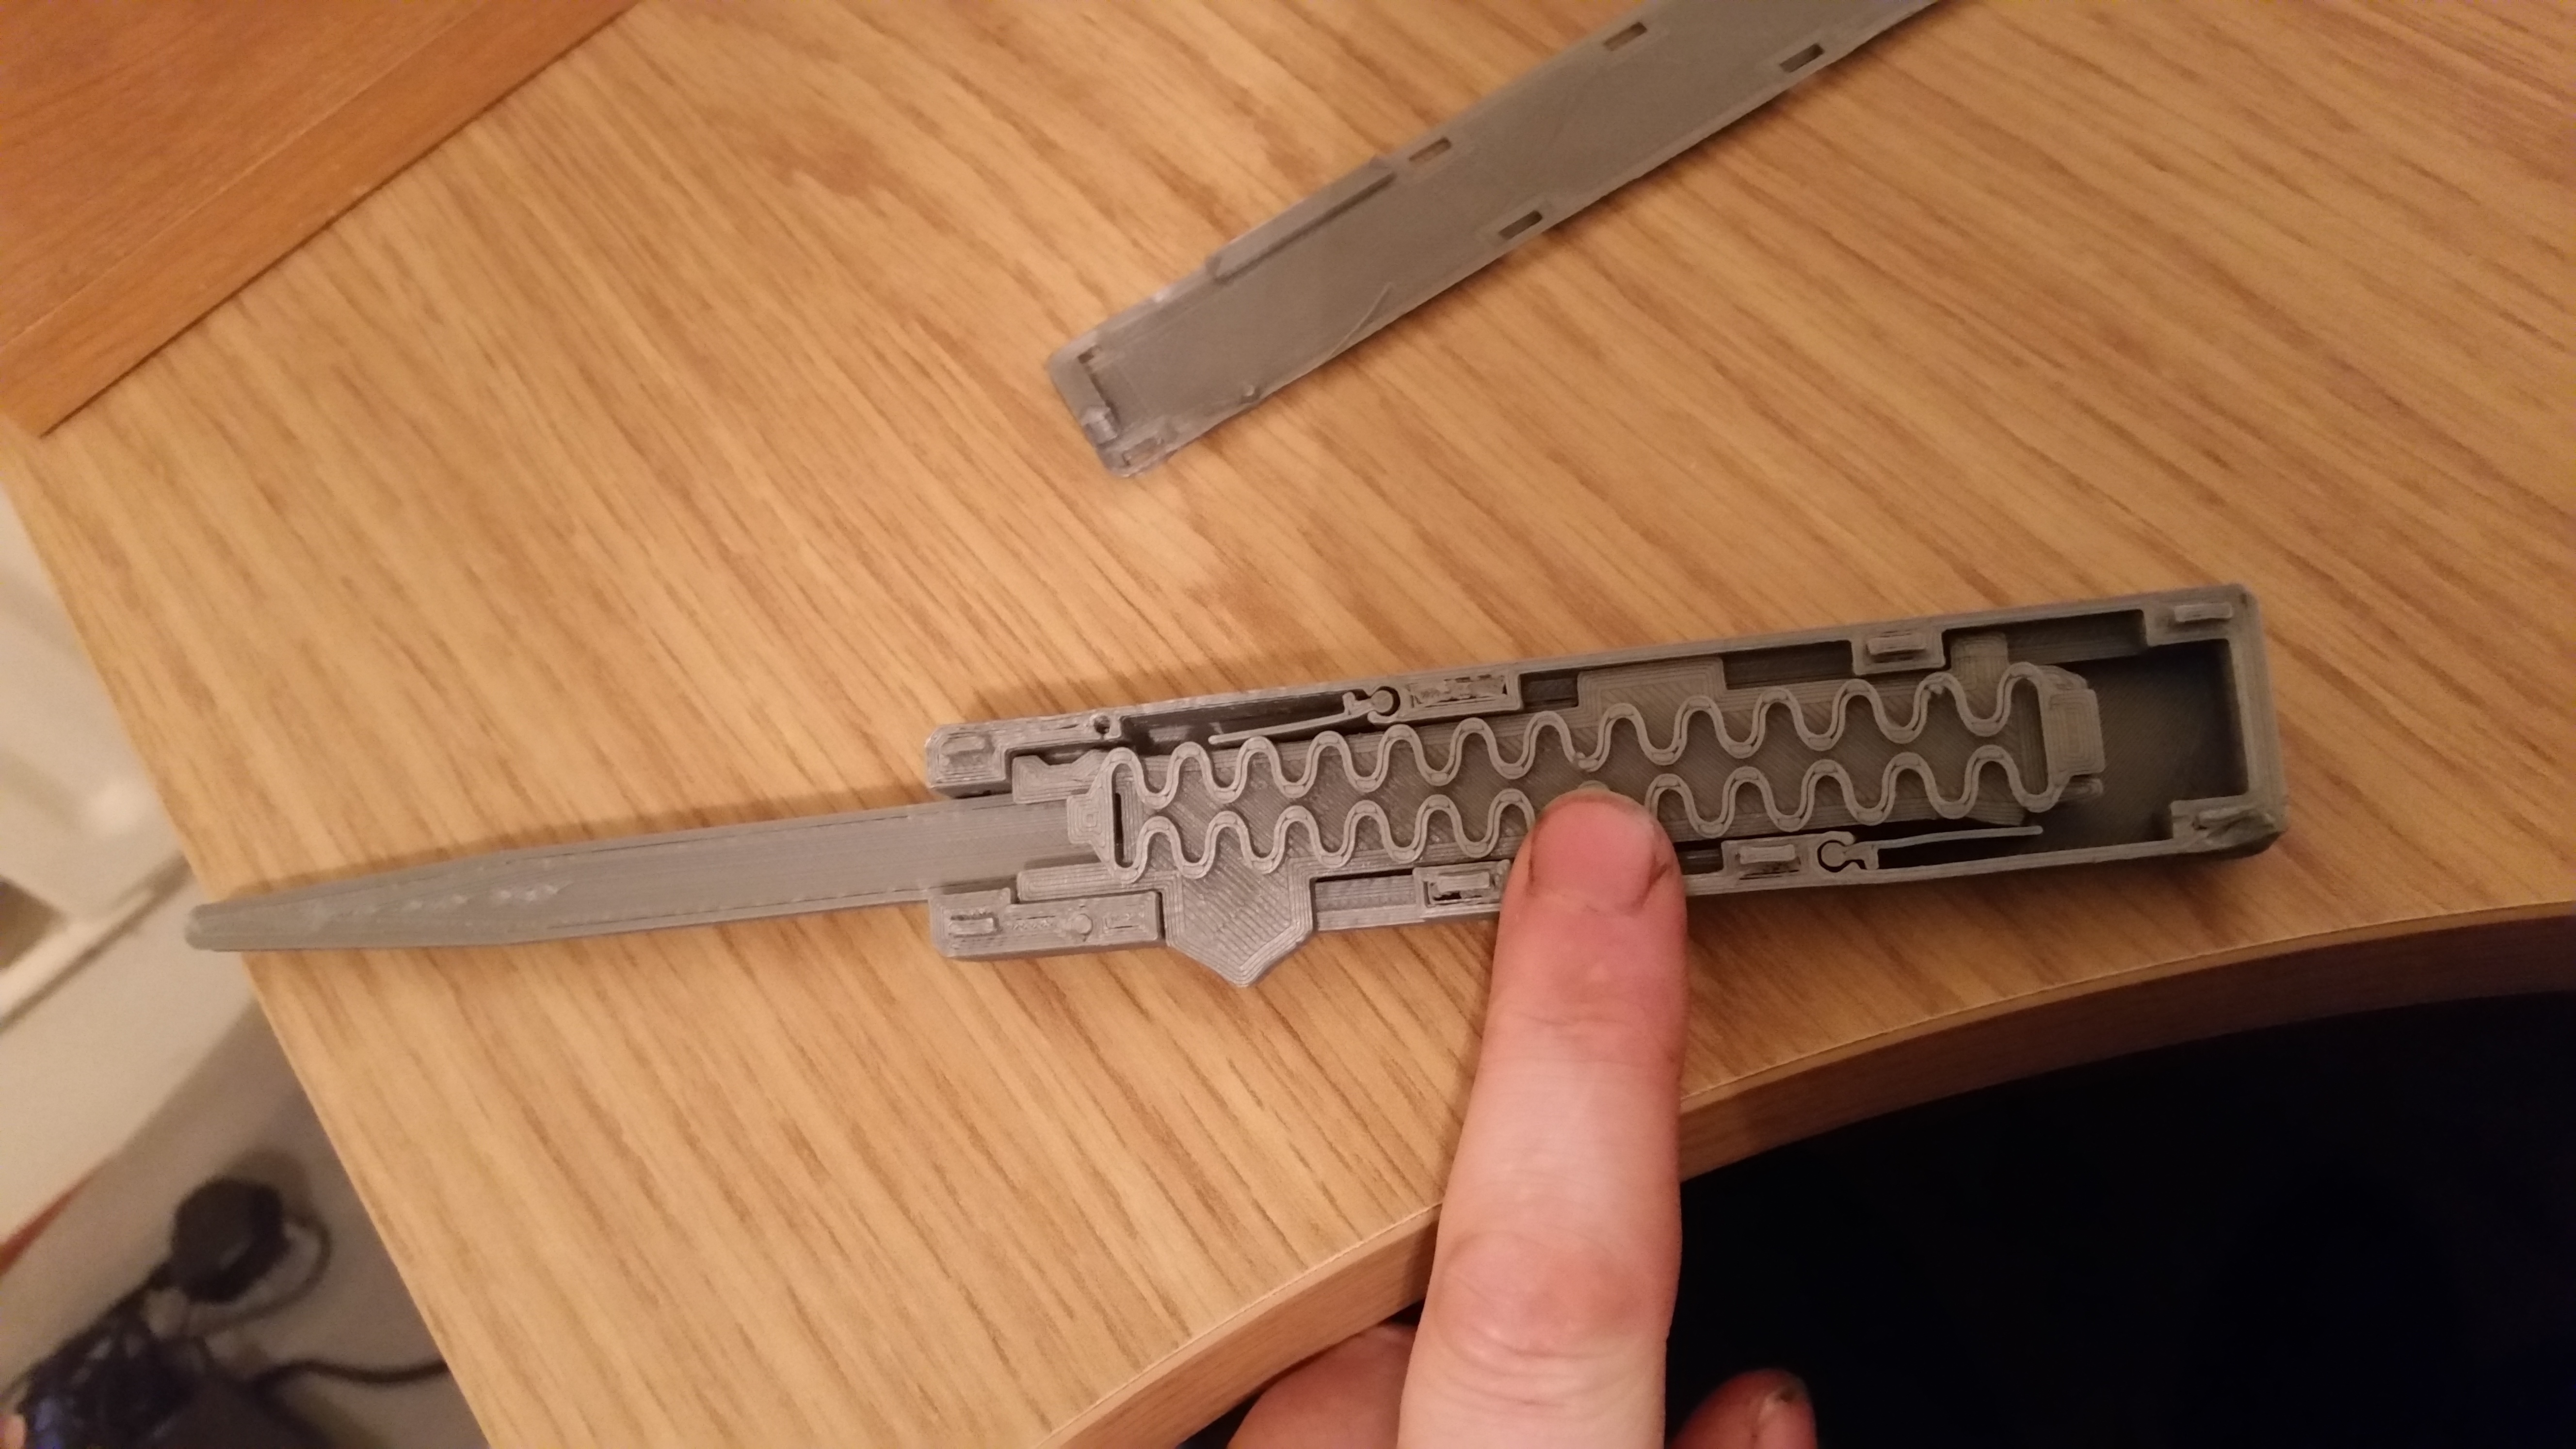 Autoblade (otf / flick) knife 3D Print 101619